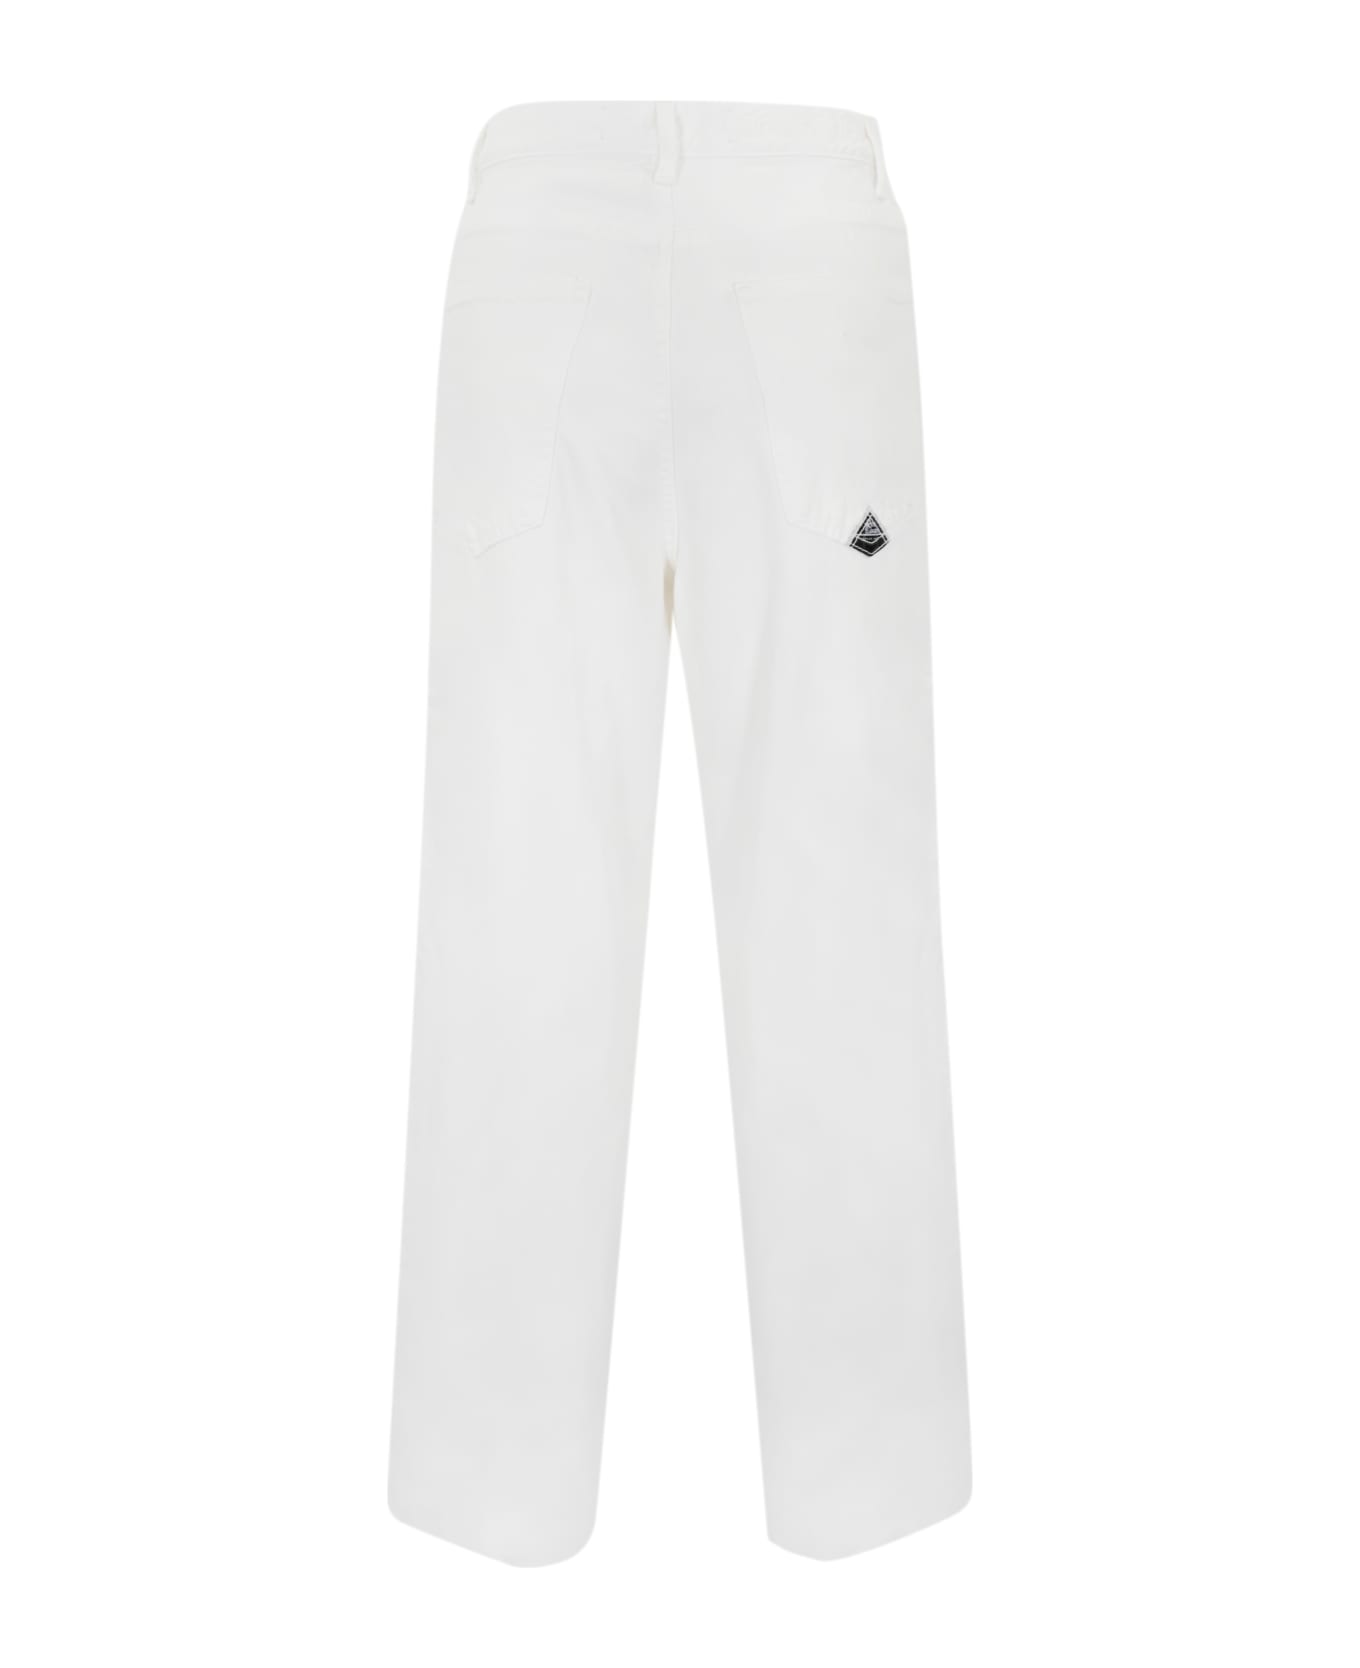 Roy Rogers White Denim Trousers - White